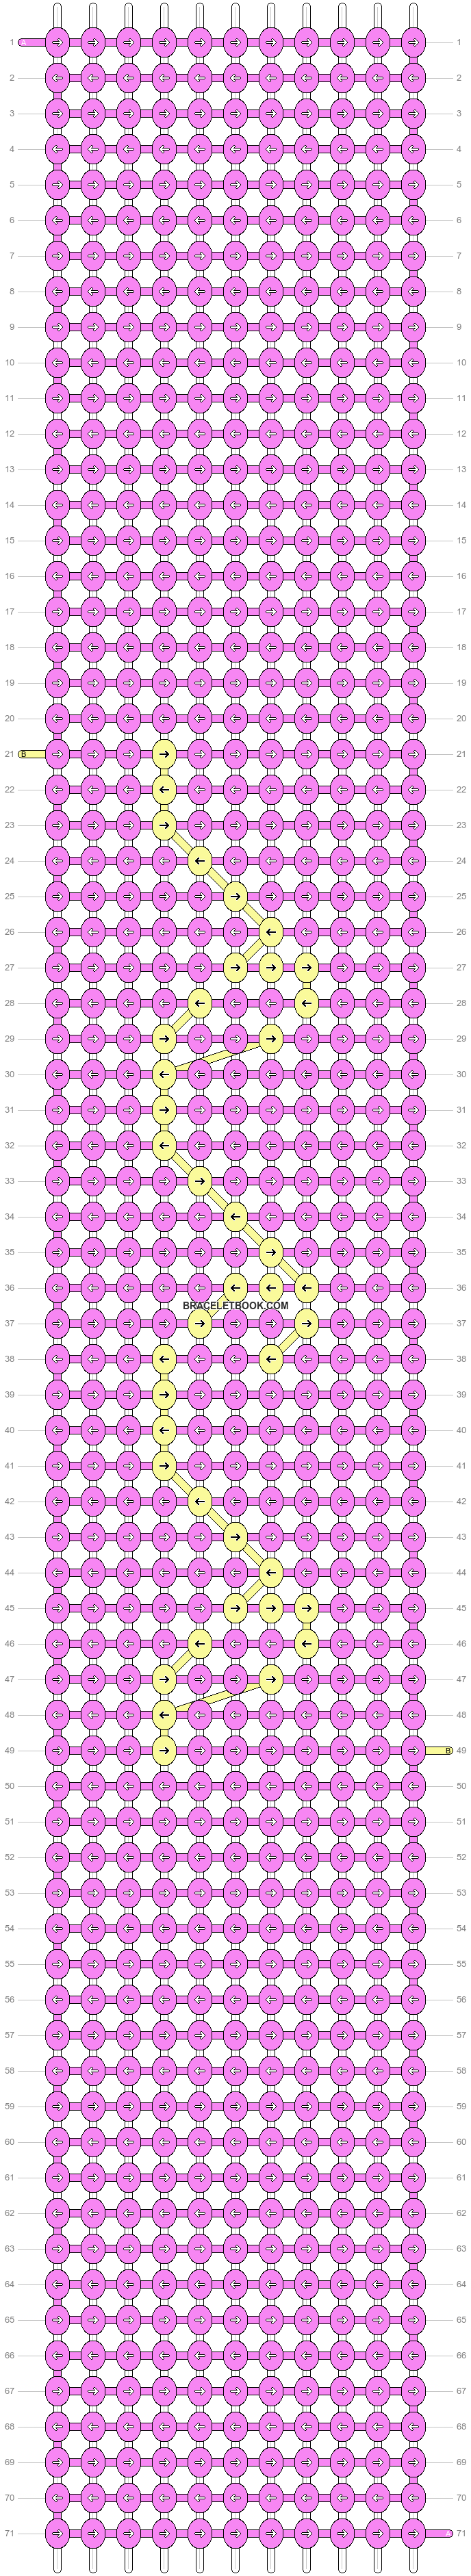 Alpha pattern #38672 variation #48784 pattern